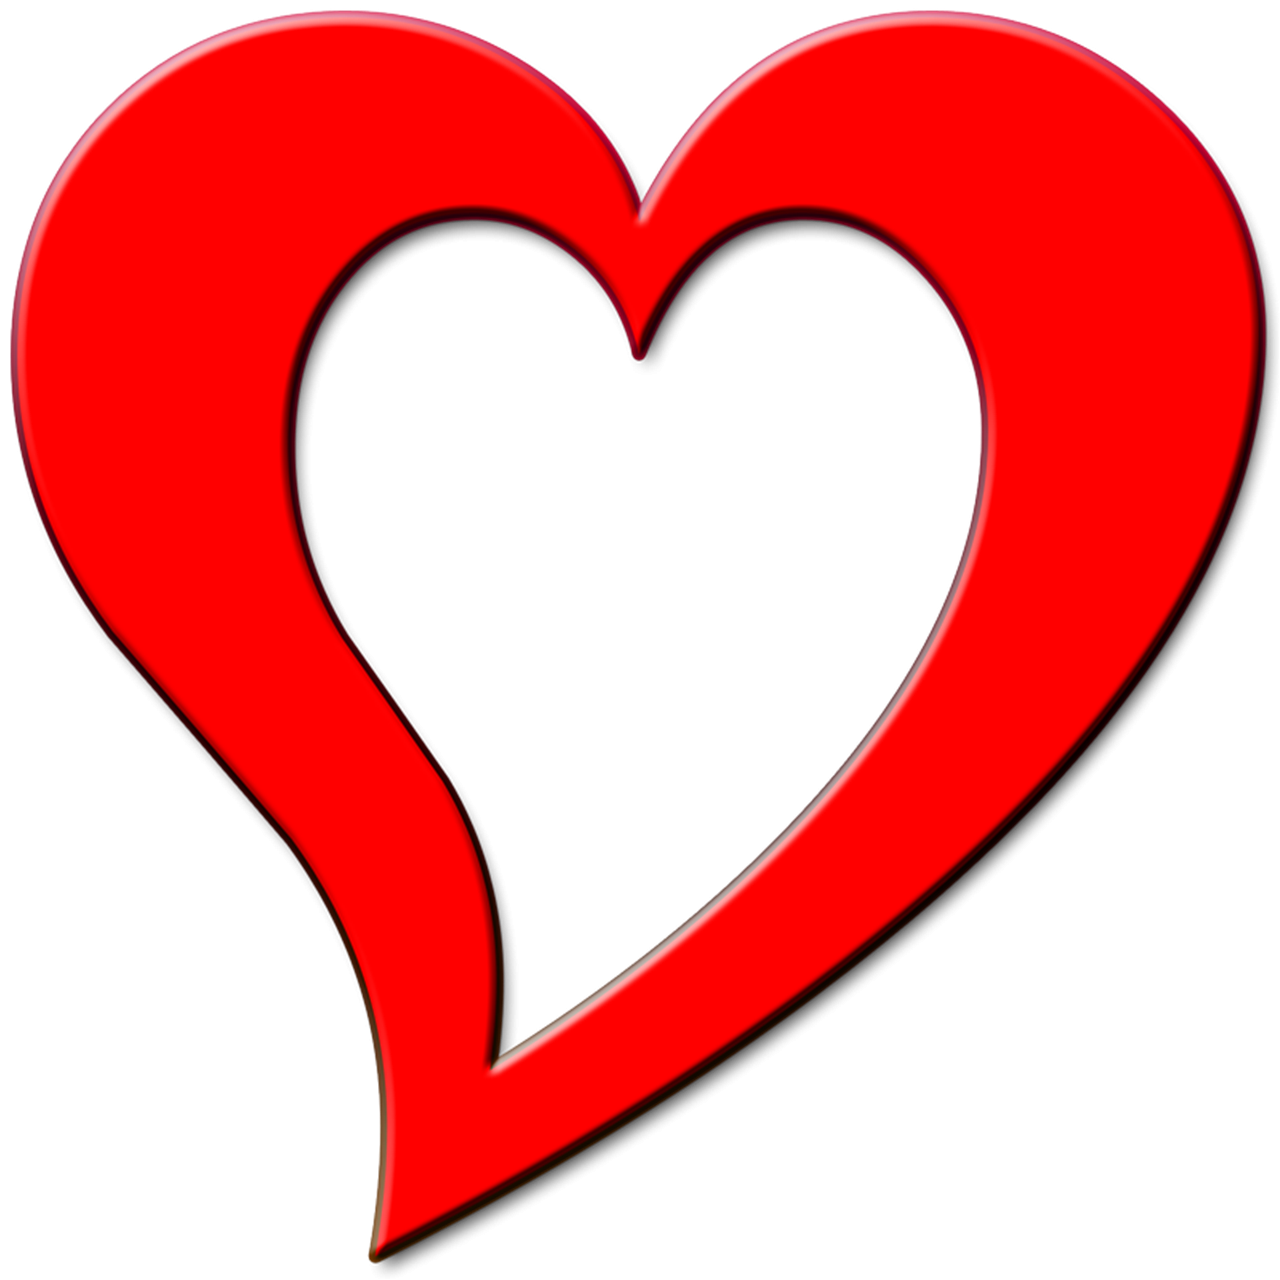 Удлиненное сердце. Символ сердца. Сердечко символ. С красным сердцем. Сердце контур.